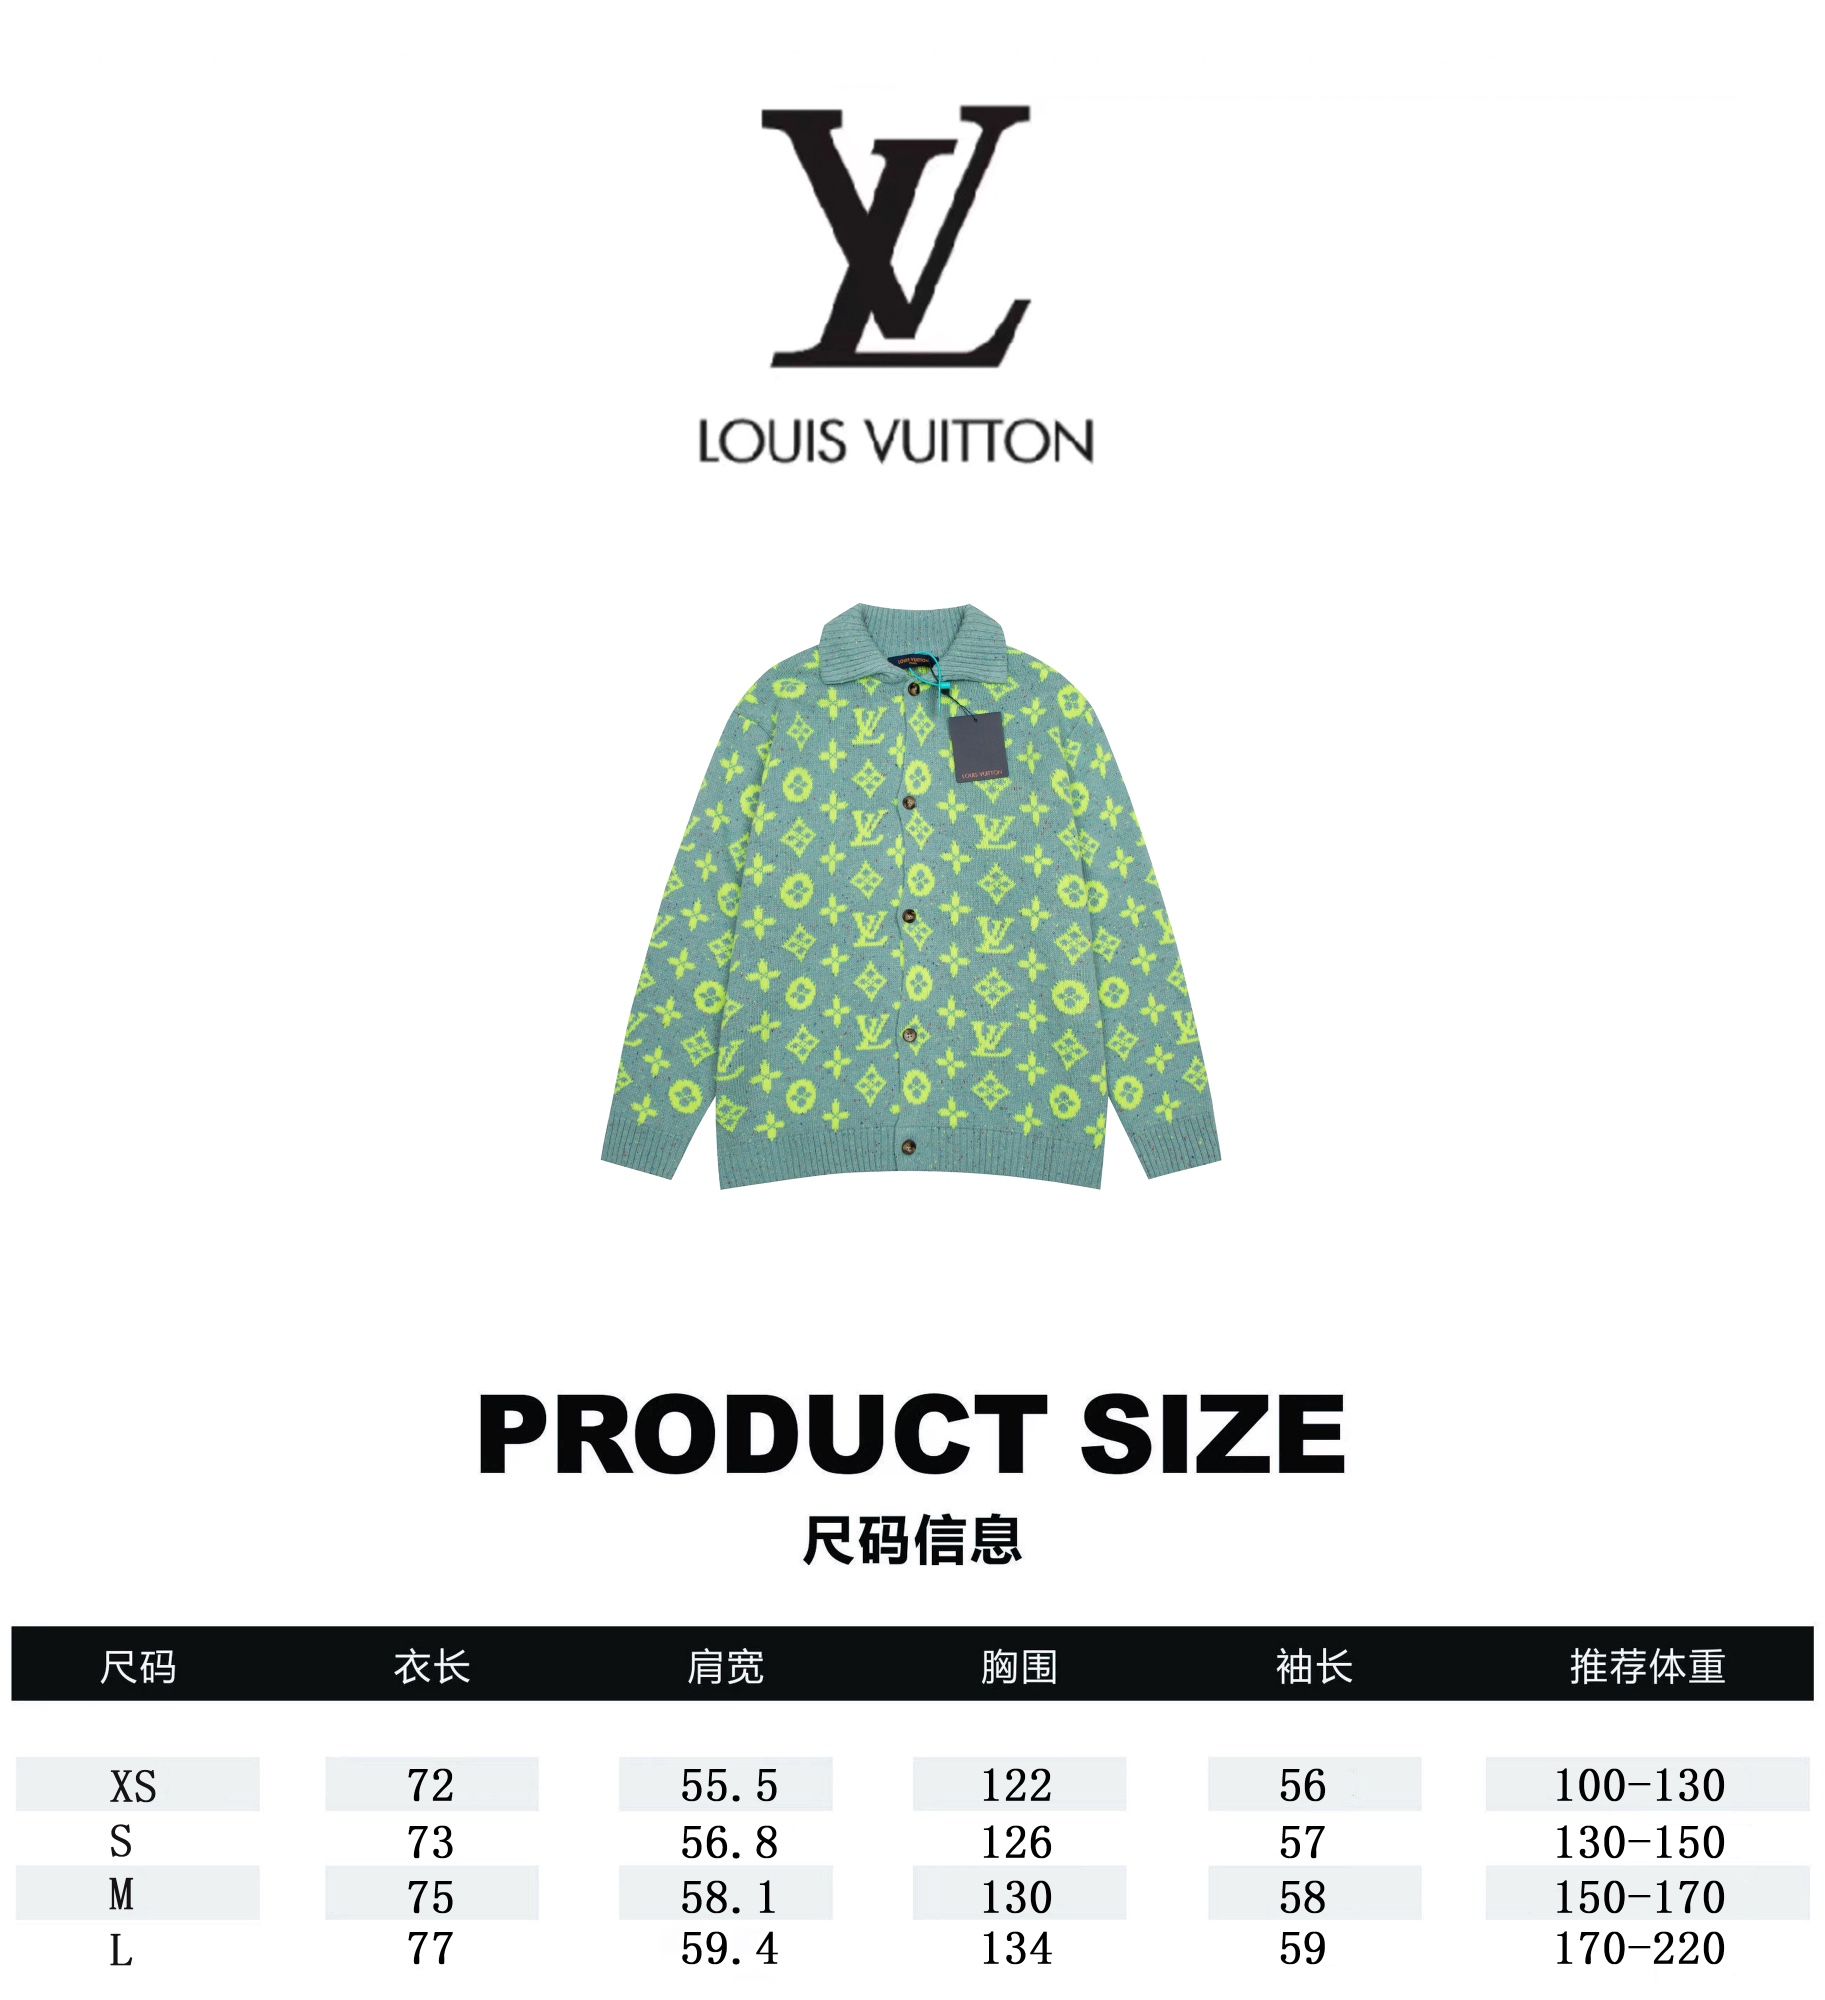 Buy Top High quality Replica
 Louis Vuitton Clothing Cardigans Coats & Jackets Sweatshirts